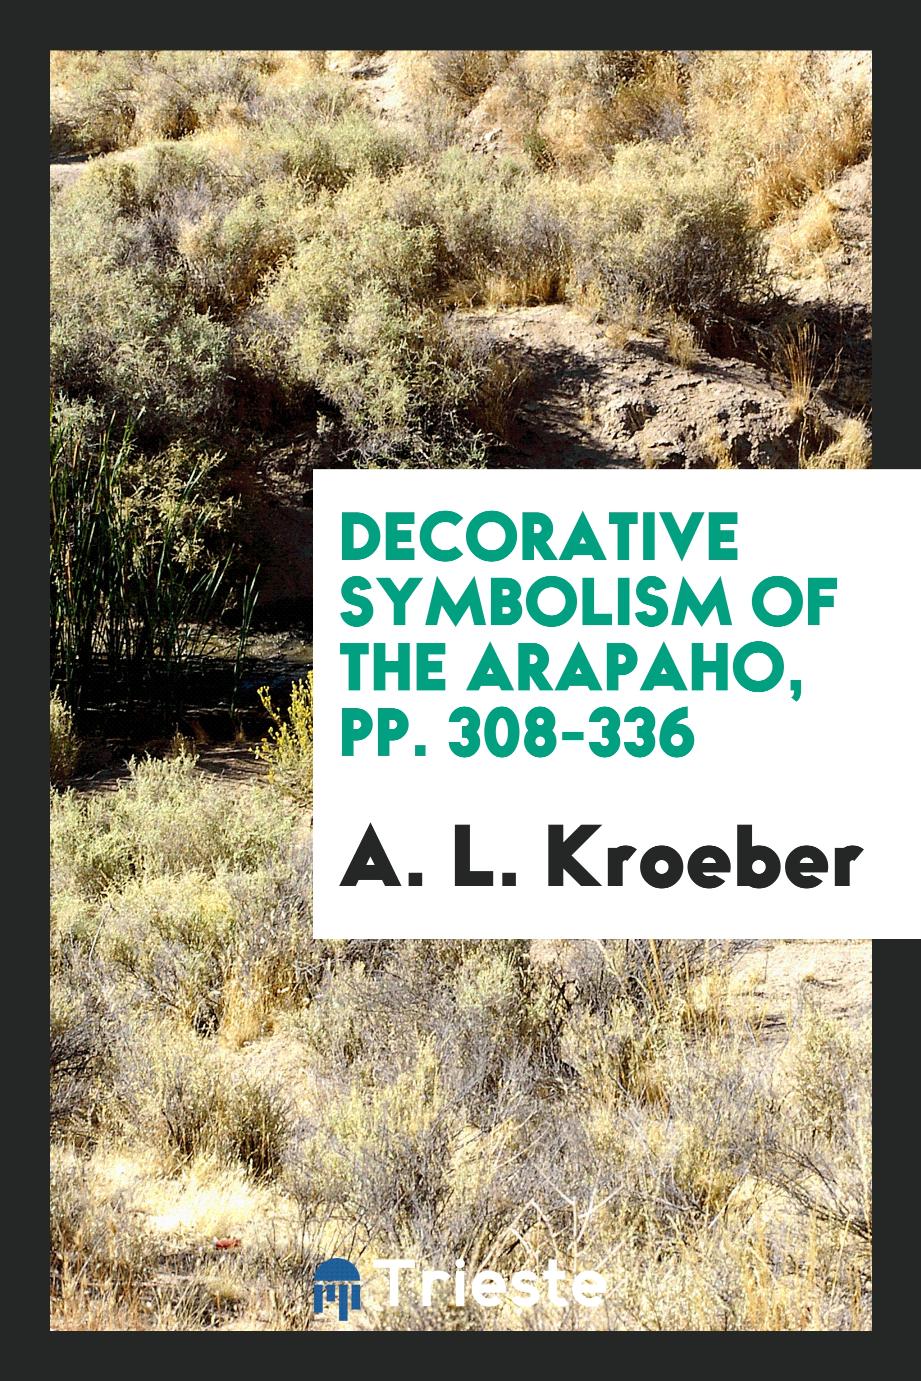 Decorative Symbolism of the Arapaho, pp. 308-336